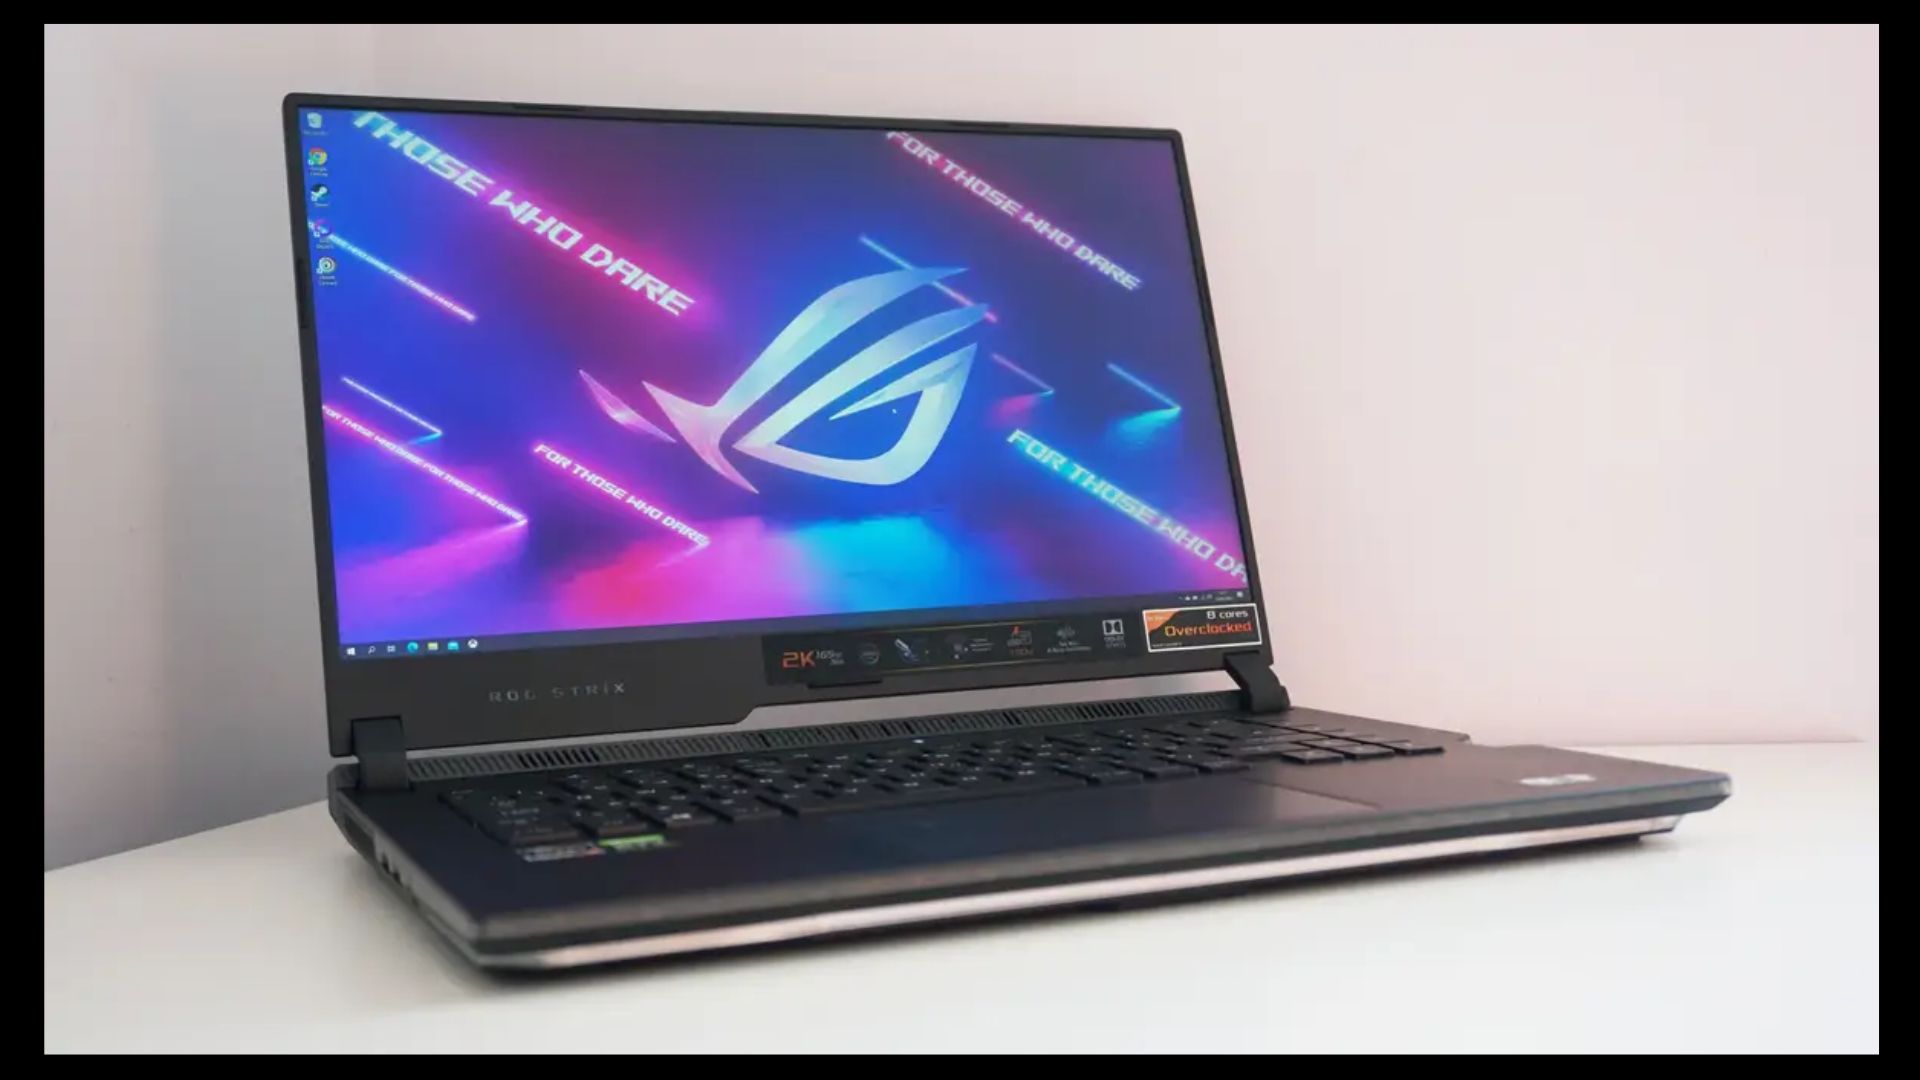 Asus Rog FX503 Gaming Laptop for (Secret) Esports Gaming